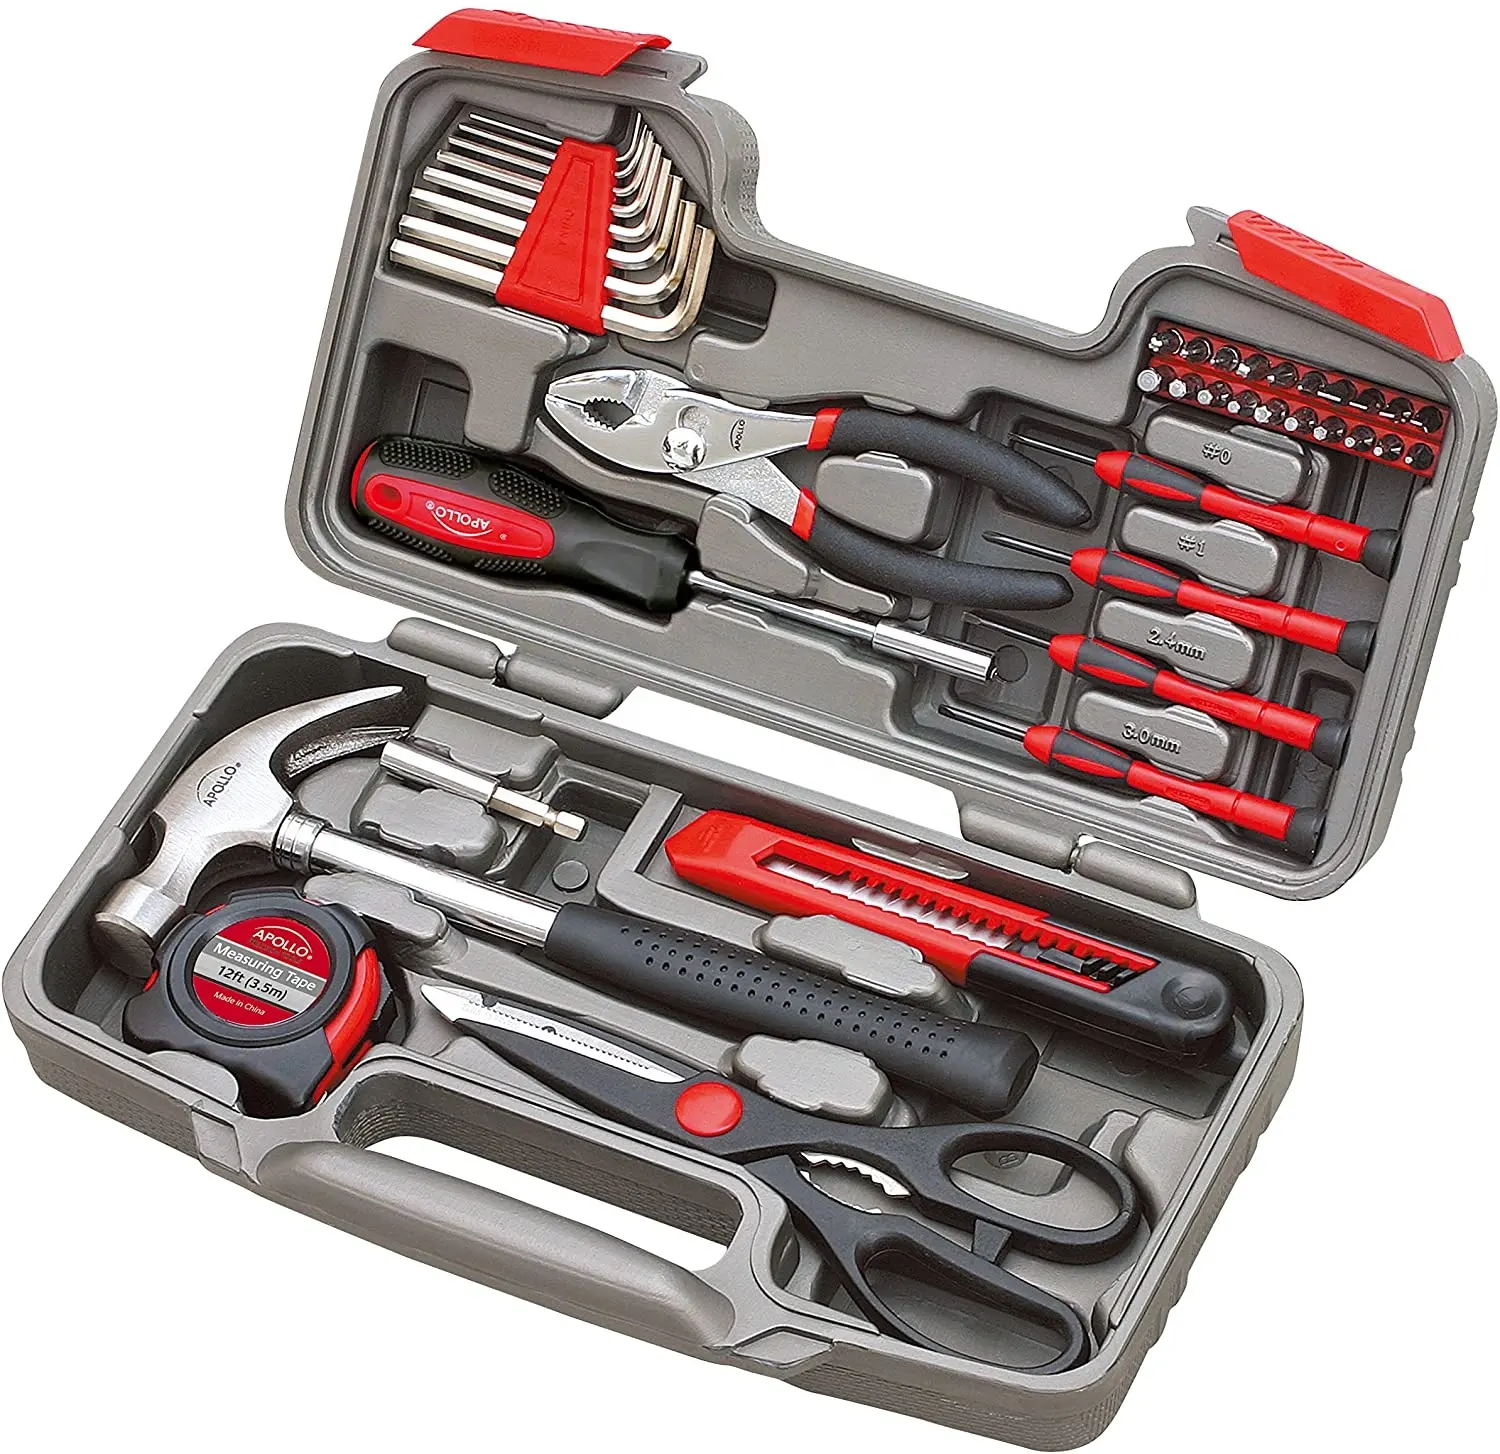 Original 39 piece Universal Repair Hand Tool Set with Toolbox storage box, red